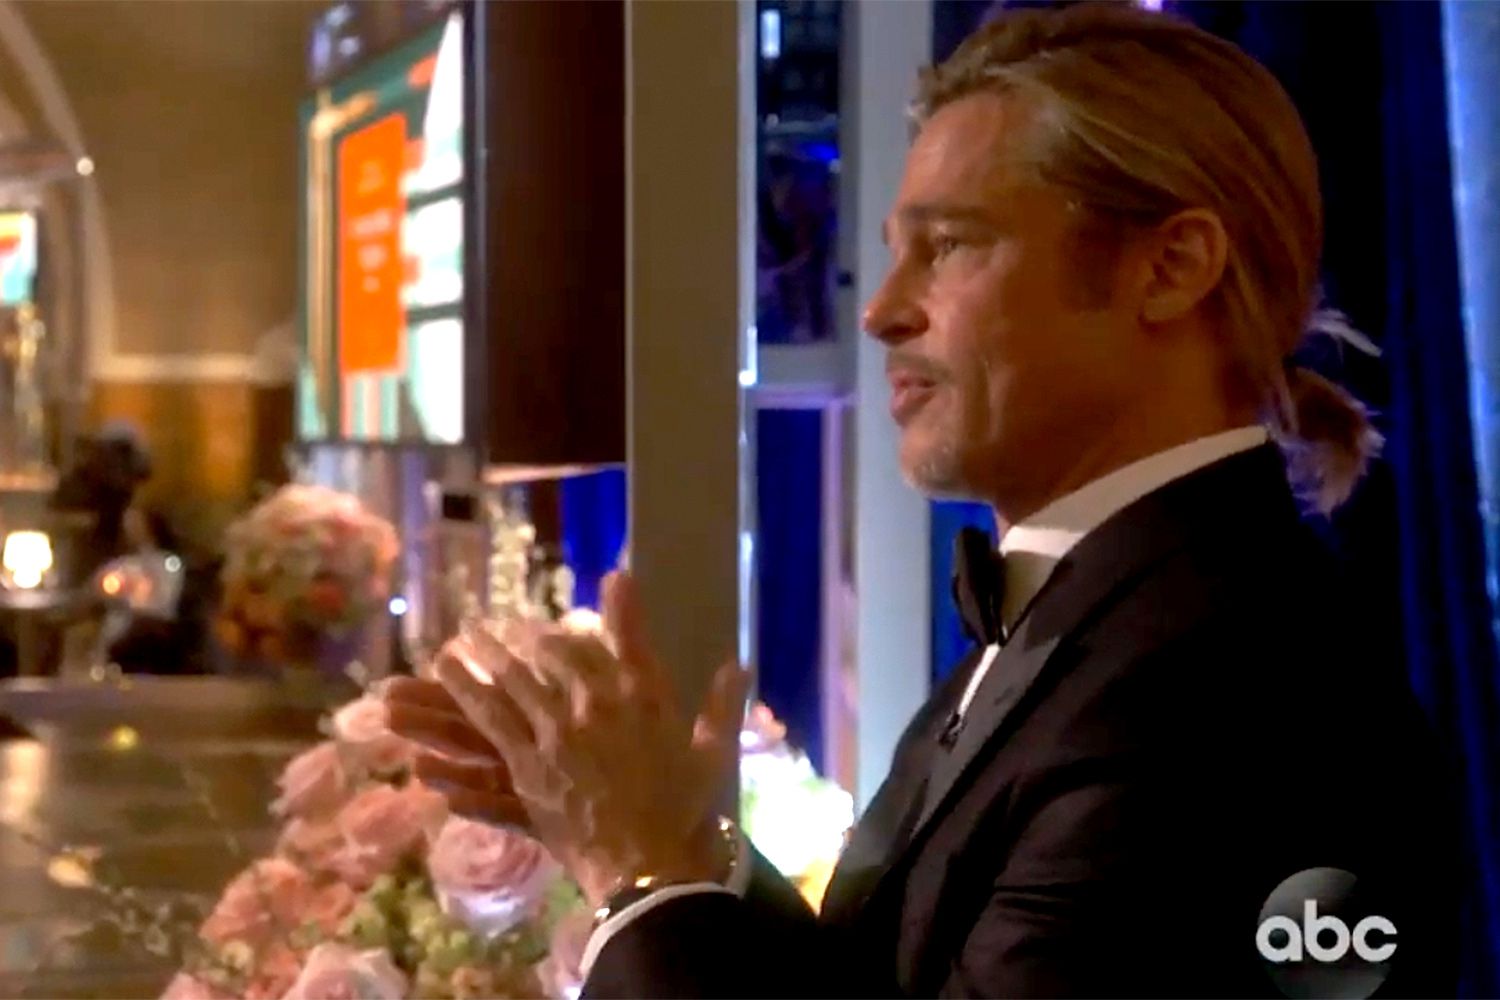 Oscars 2021: Brad Pitt Tears Up Watching Youn Yuh-jung Win Award | PEOPLE.com